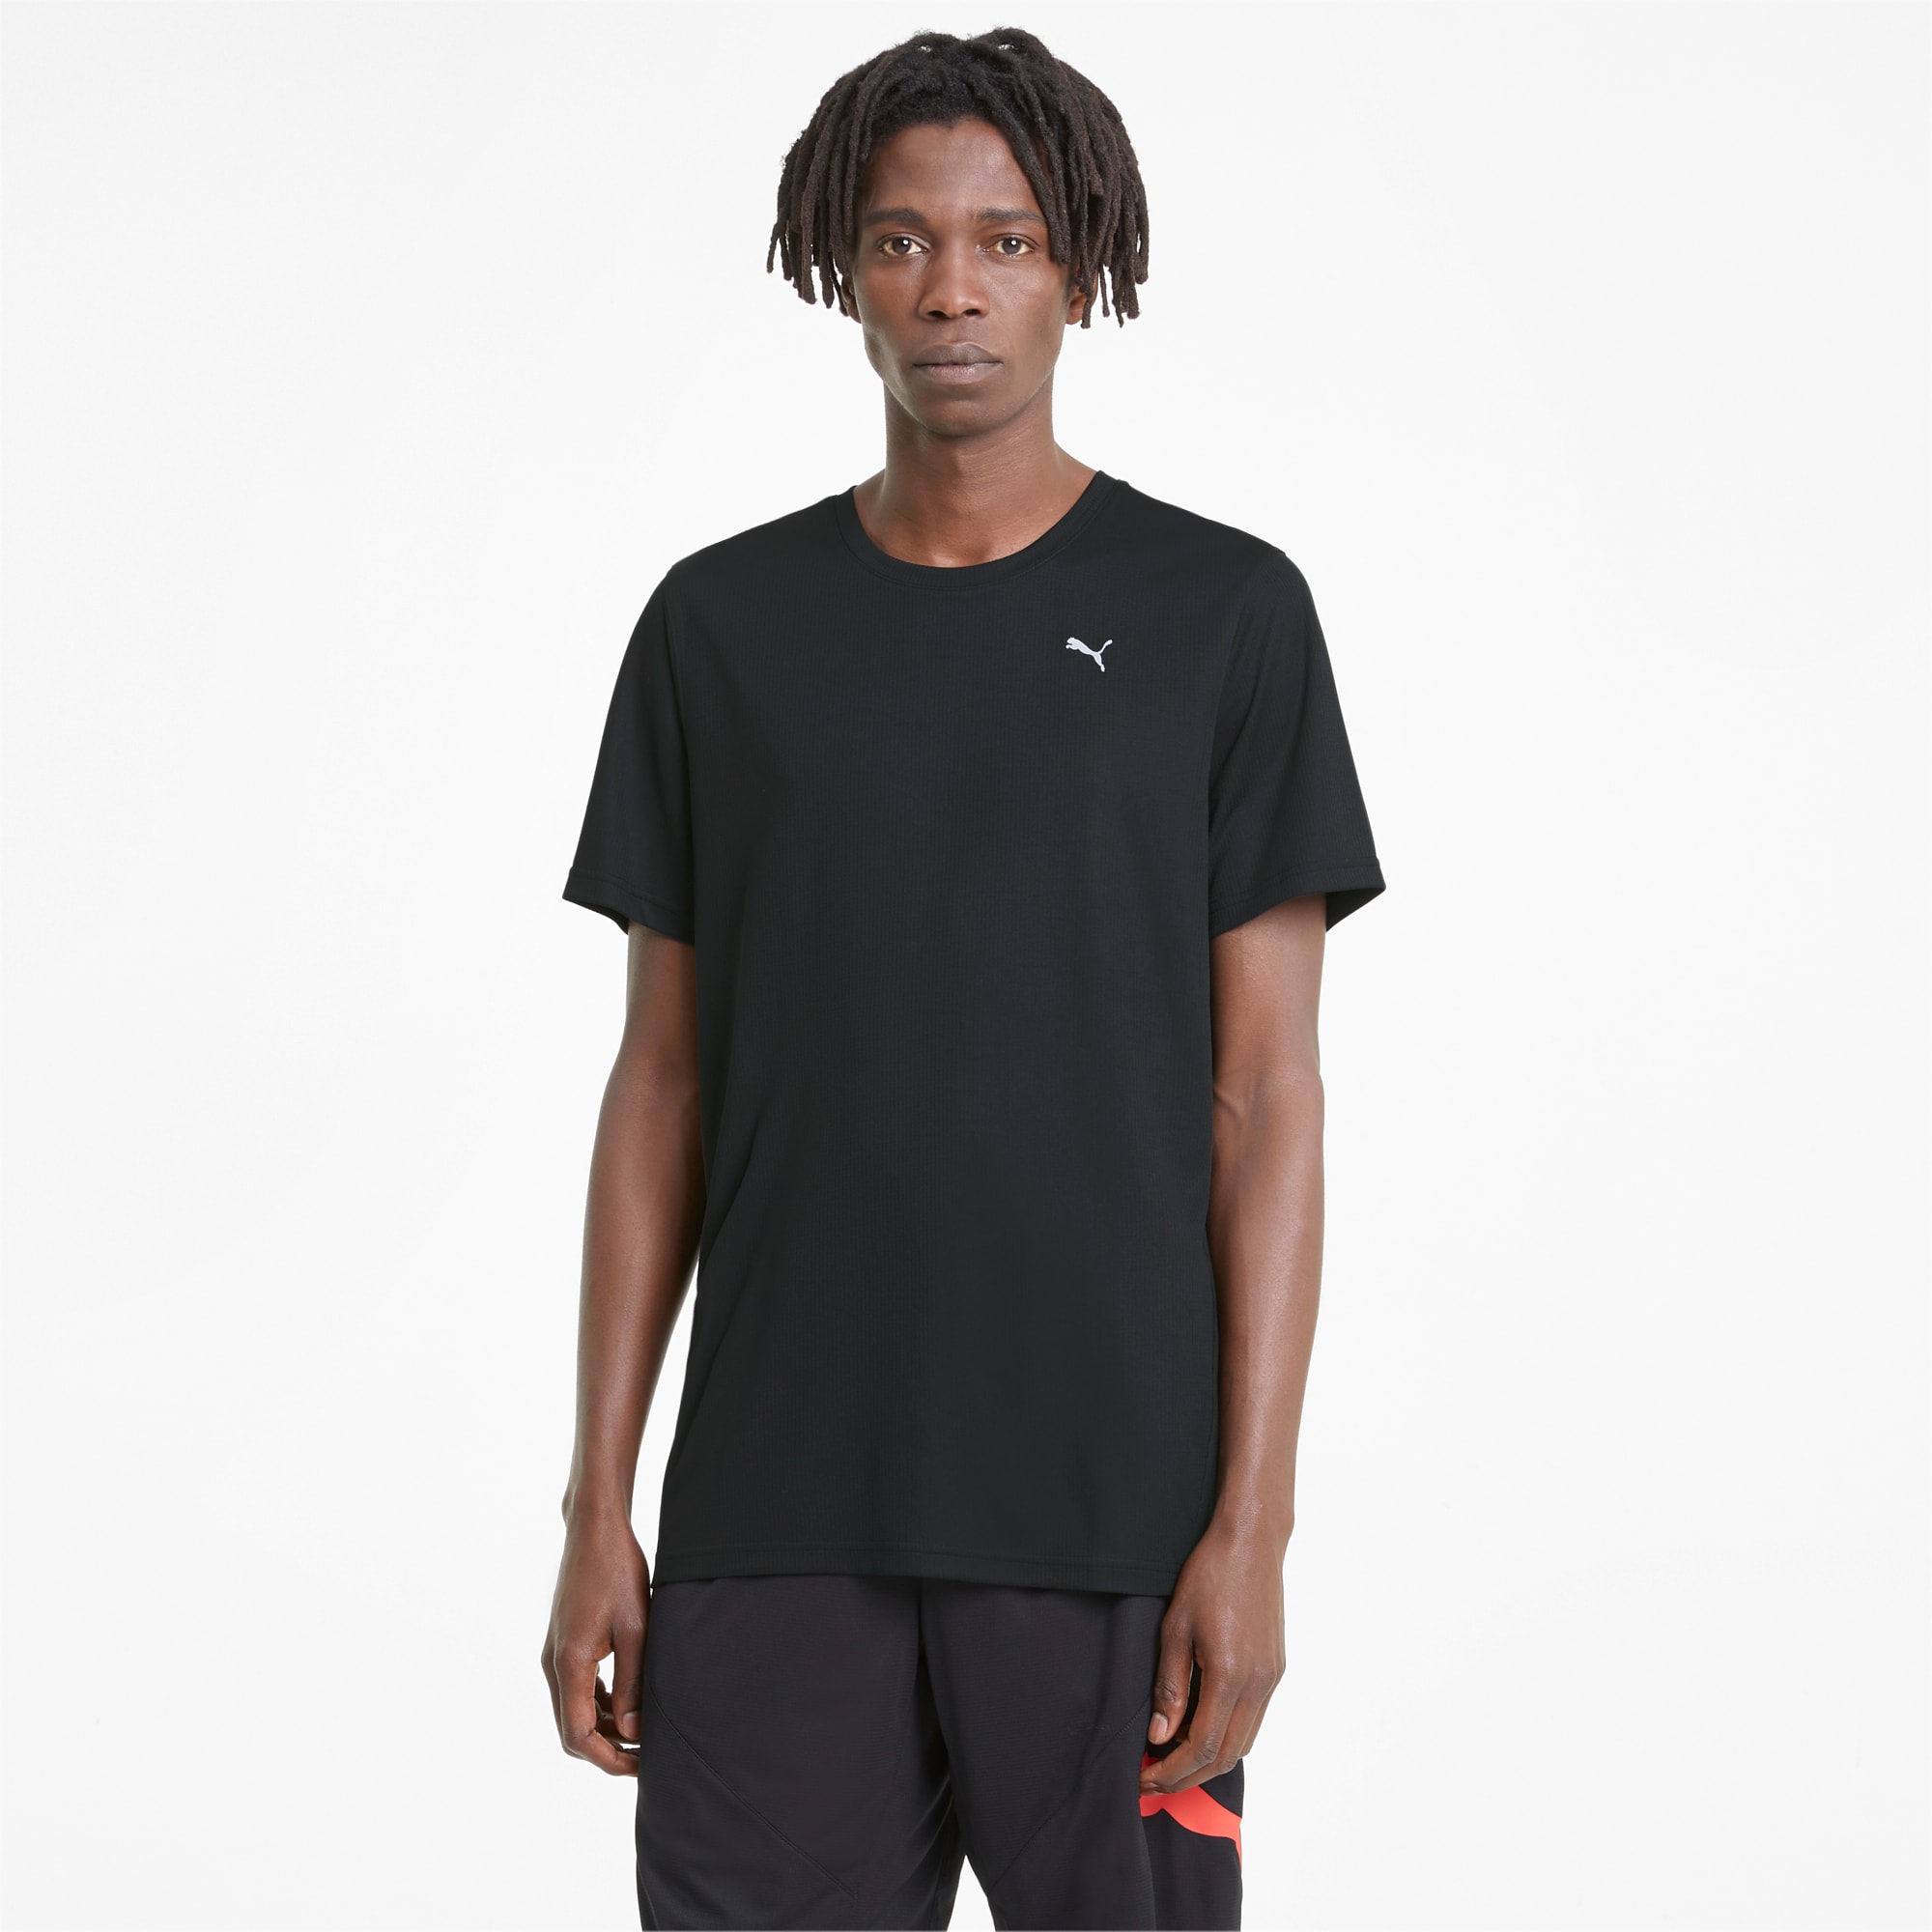 PUMA Performance Short Sleeve Men's Training T-Shirt, Black, Size XL, Clothing